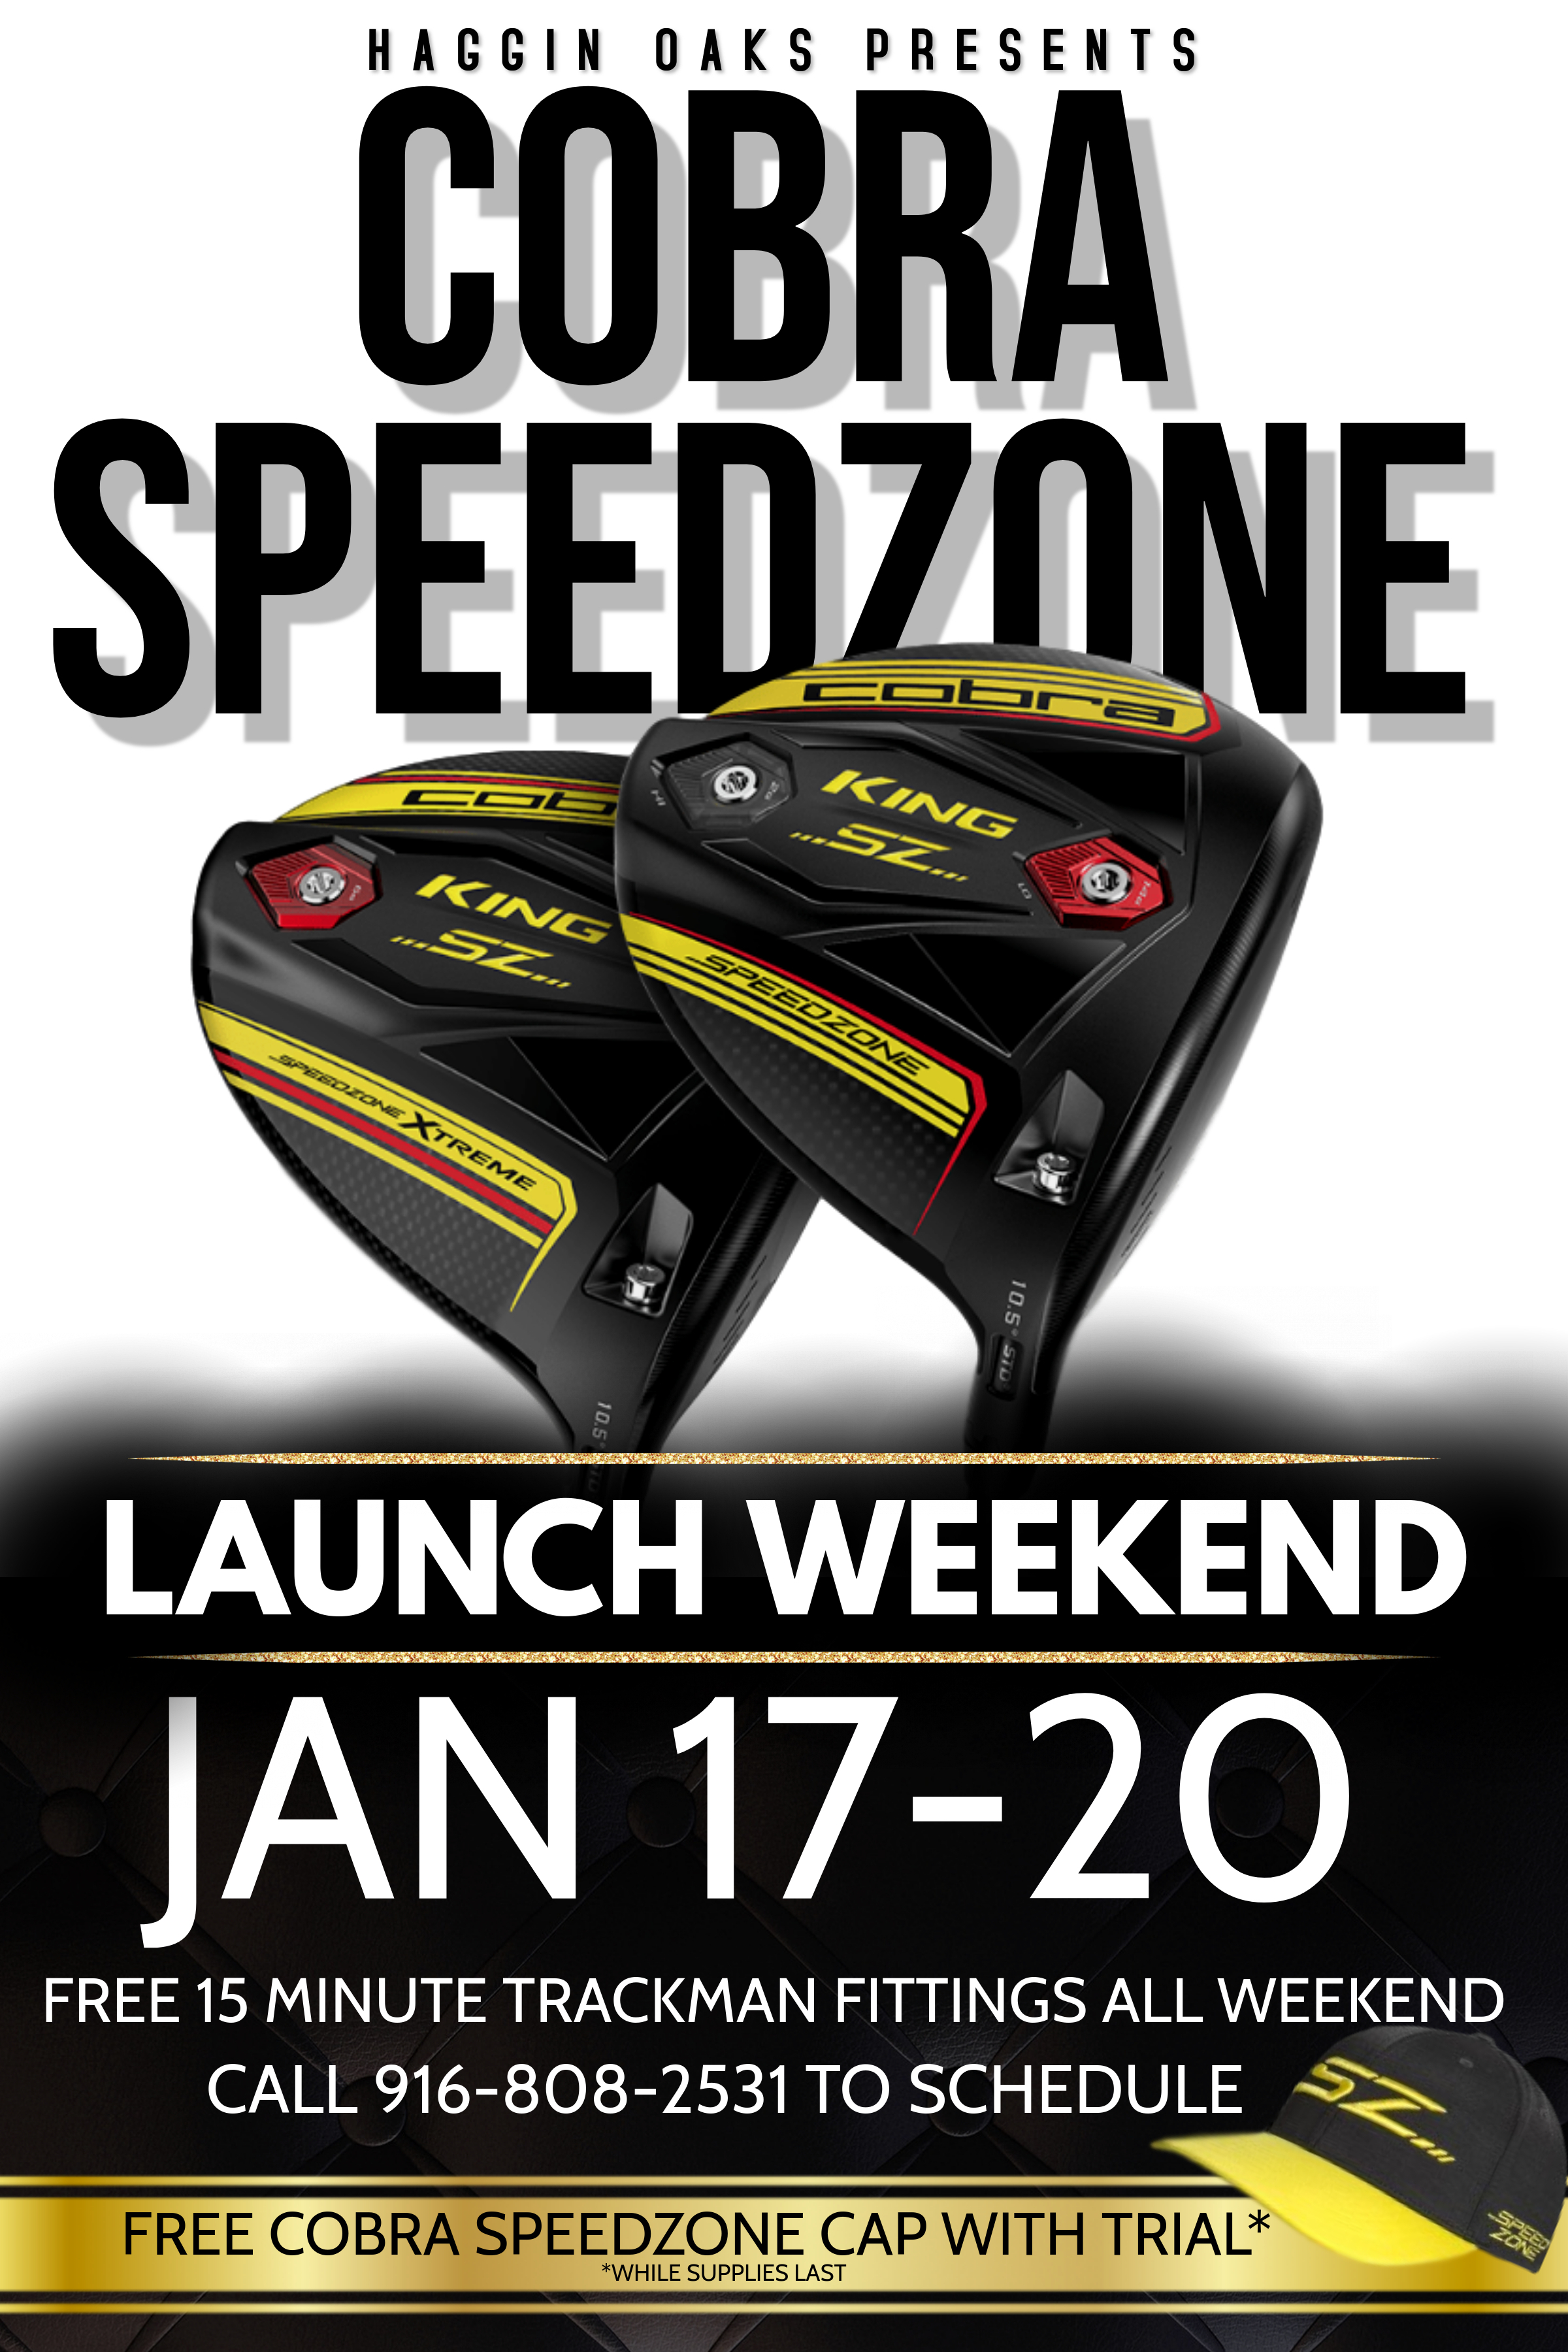 Haggin Oaks Cobra Speedzone Launch Weekend at Haggin Oaks January 17-20. Call 916-808-2531 to schedule a free 15-minute free TrackMan Fitting.